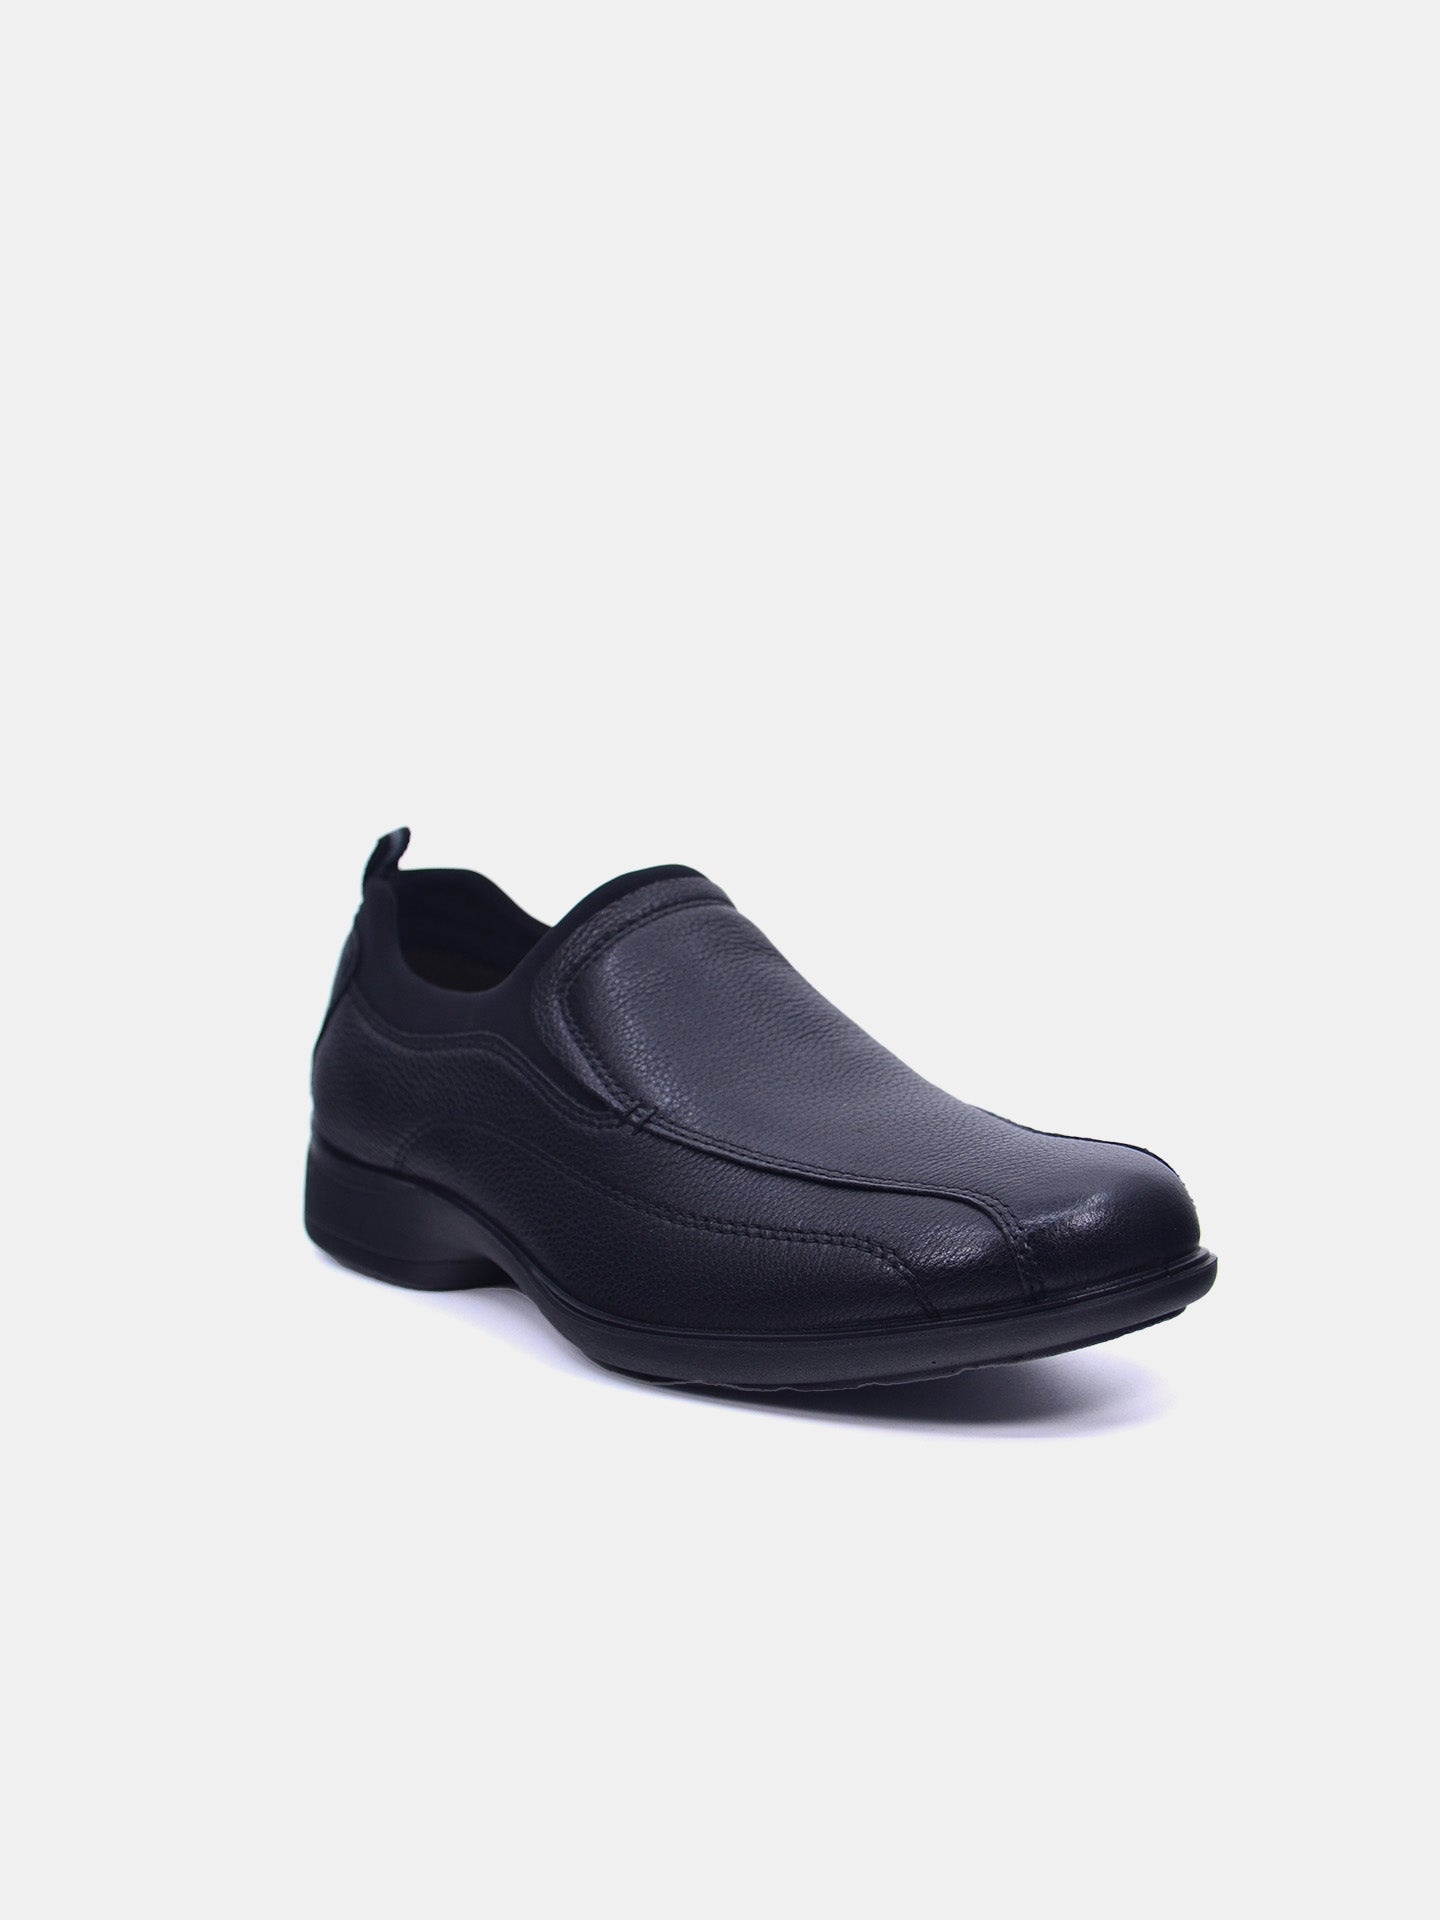 Josef Seibel M406 Men's Casual Slip On Shoes #color_Black